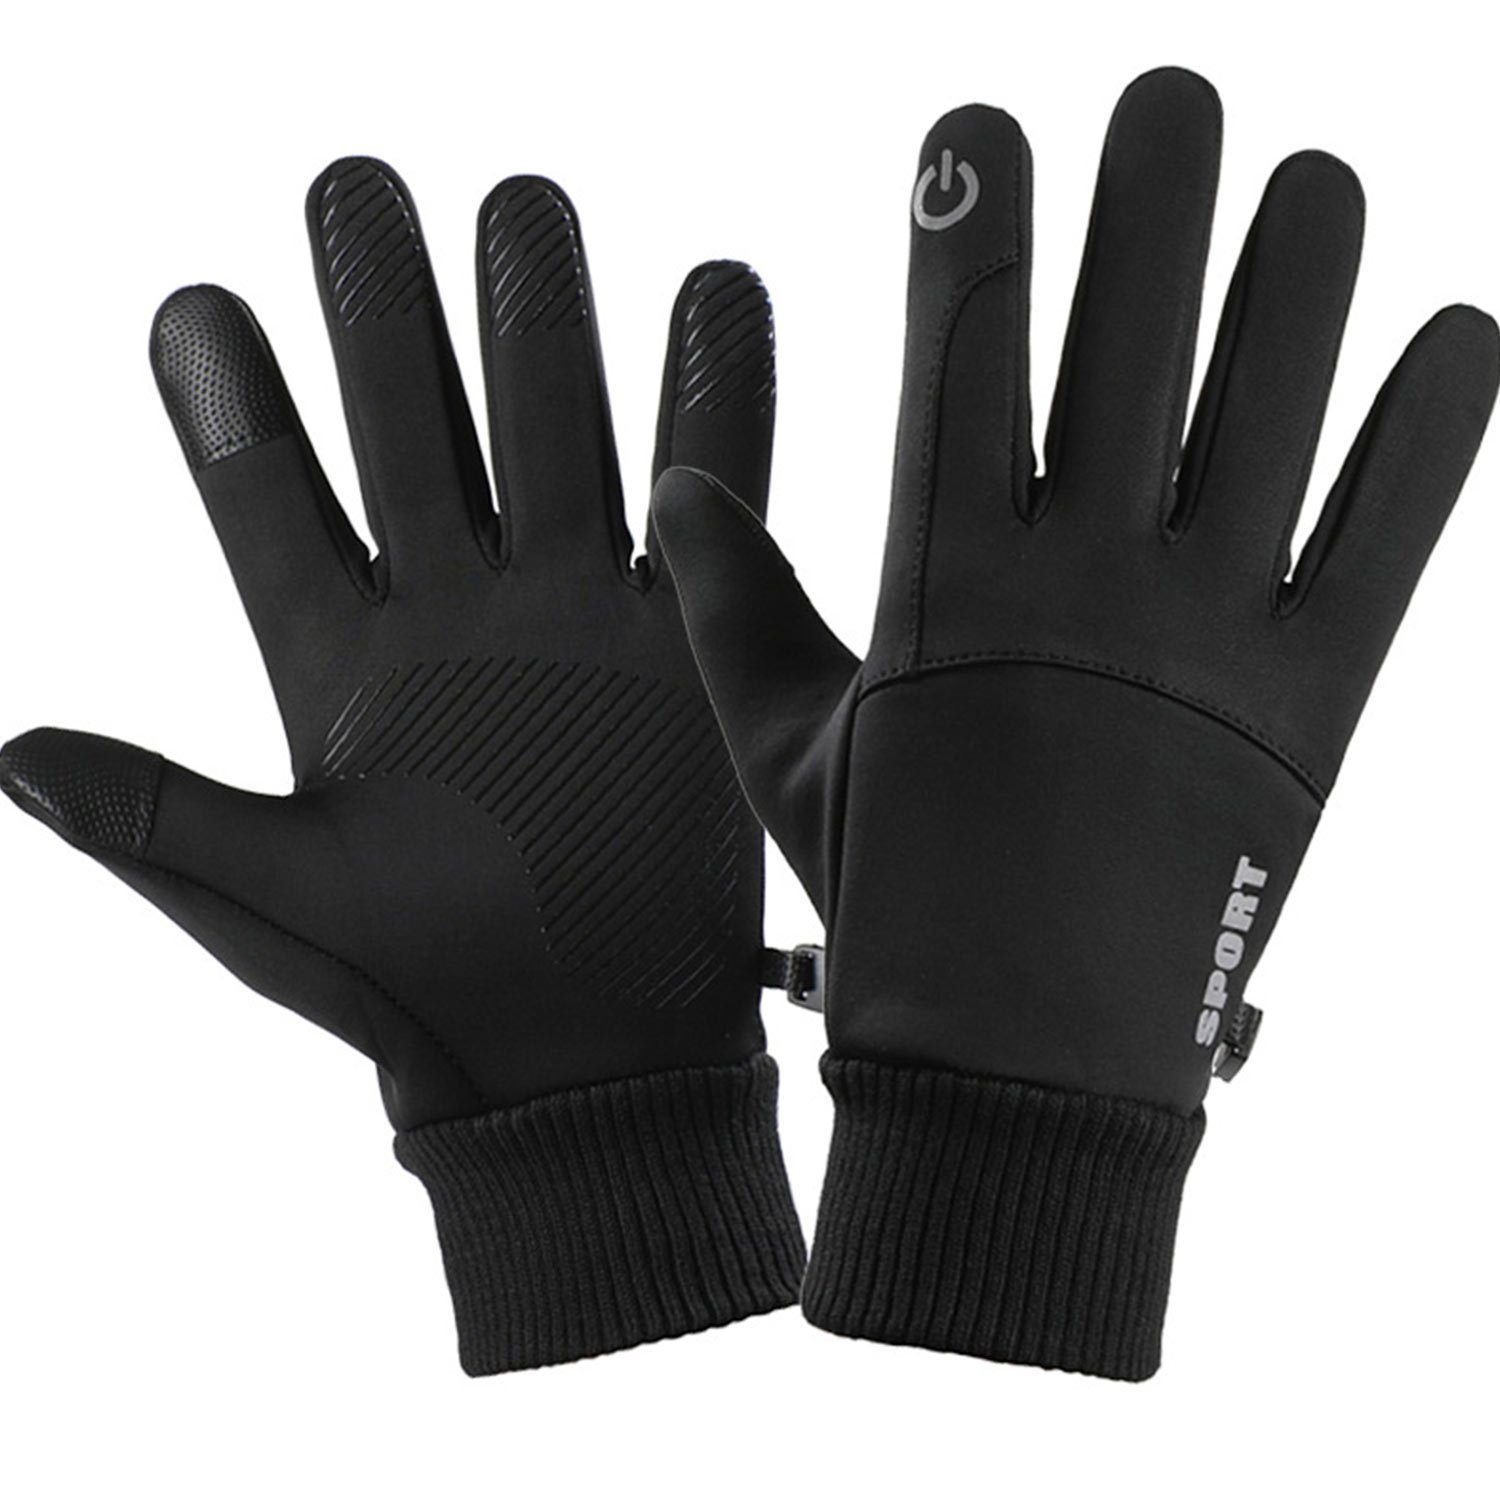 MAGICSHE Fahrradhandschuhe Unisex Touchscreen Handschuhe warme Handschuhe Geeignet zum Radfahren, Skifahren, Arbeiten im Freien schwarz